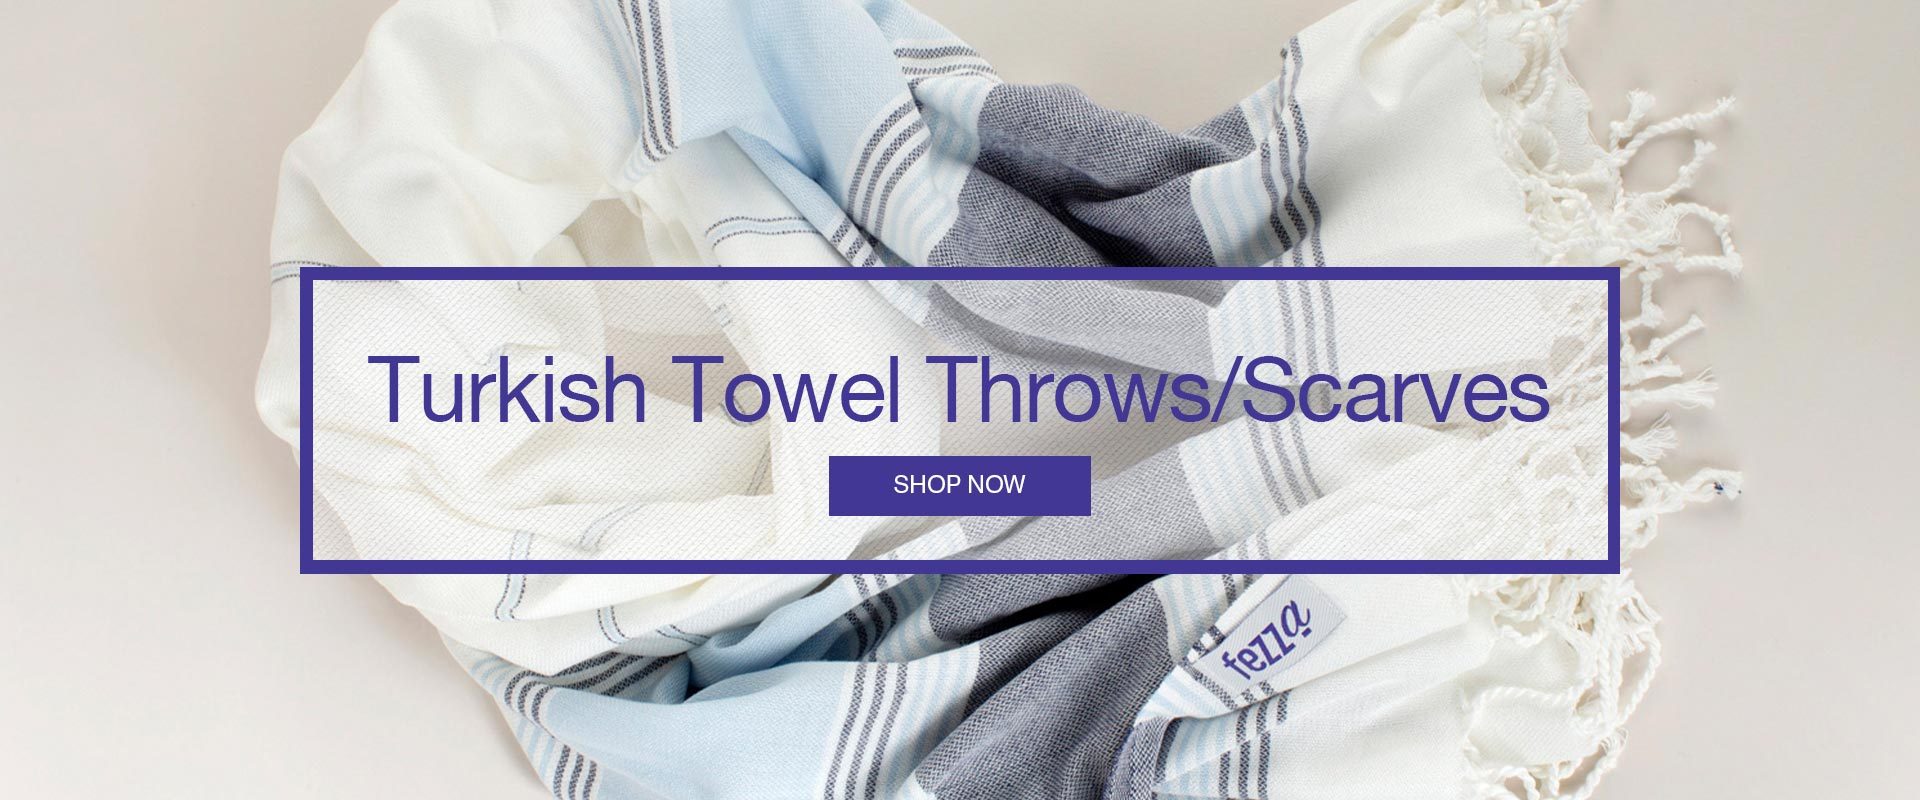 Turkish Towel Throws/Scarves